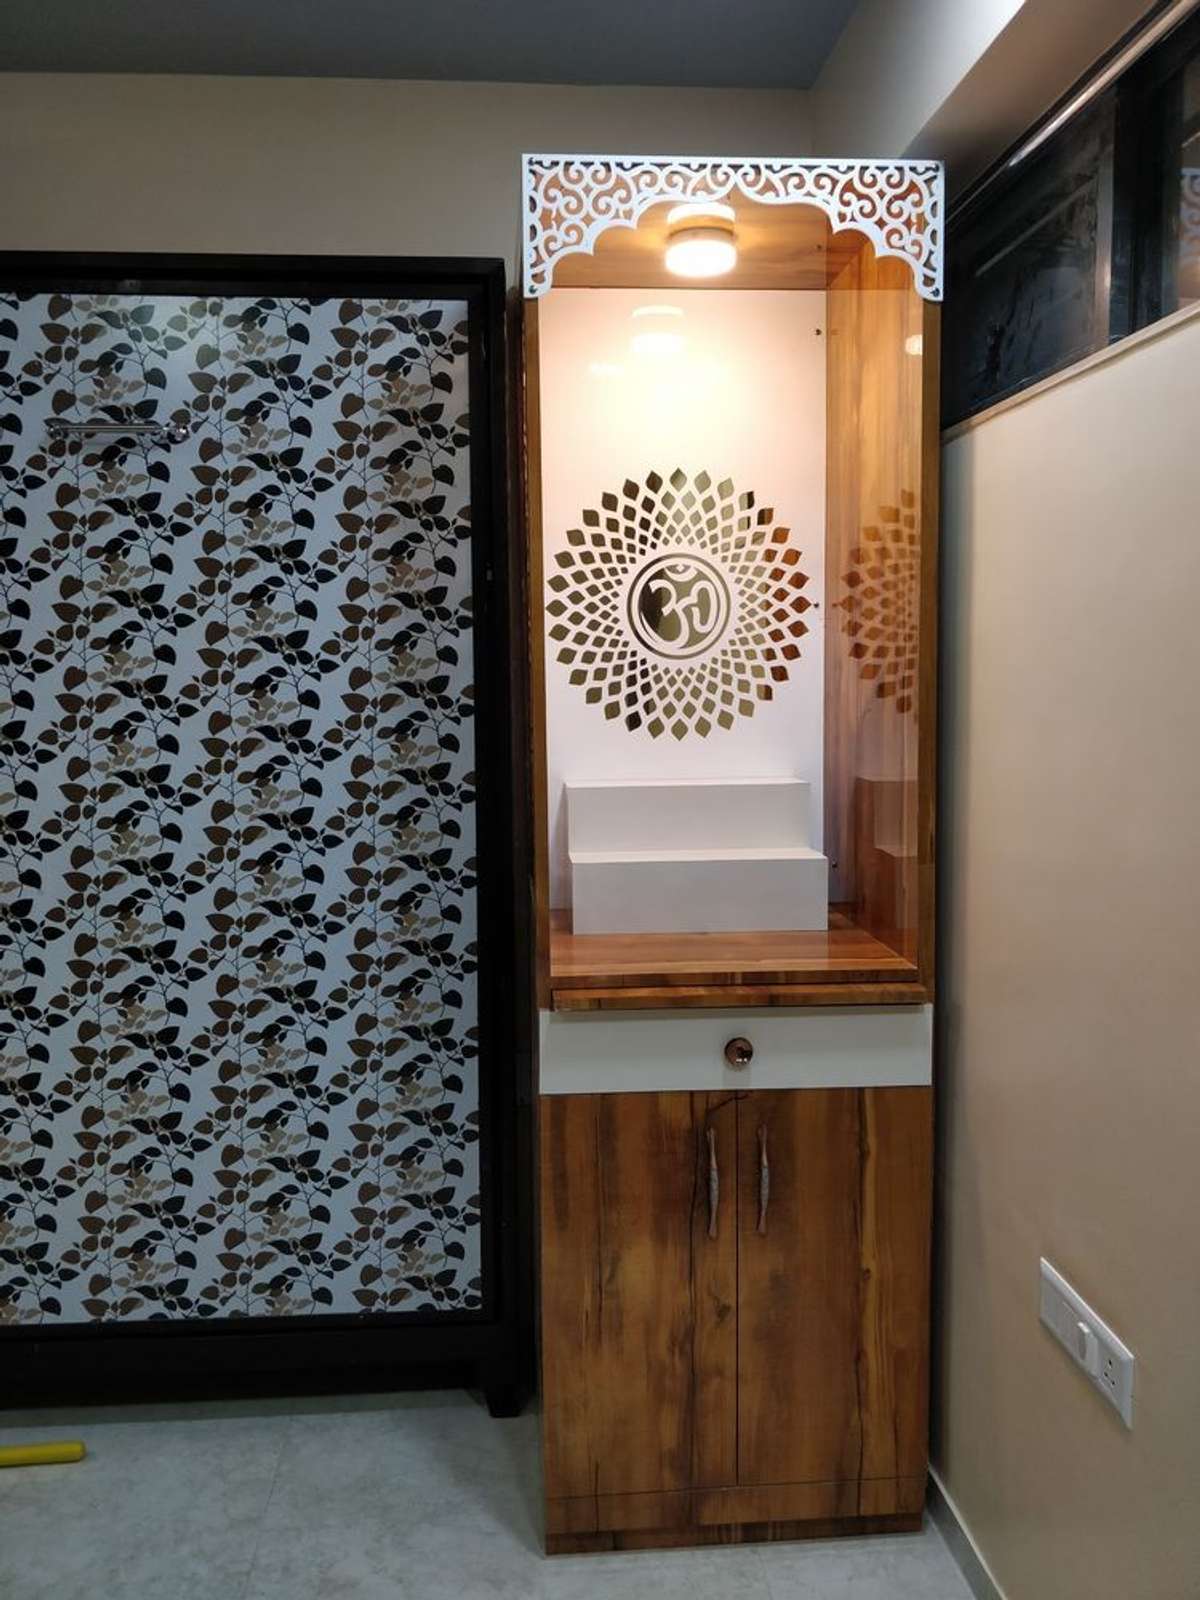 Prayer Room, Storage Designs by Carpenter ЁЯЩП рдлреЙрд▓реЛ рдХрд░реЛ рджрд┐рд▓реНрд▓реА рдХрд╛рд░рдкреЗрдВрдЯрд░ рдХреЛ, Delhi | Kolo